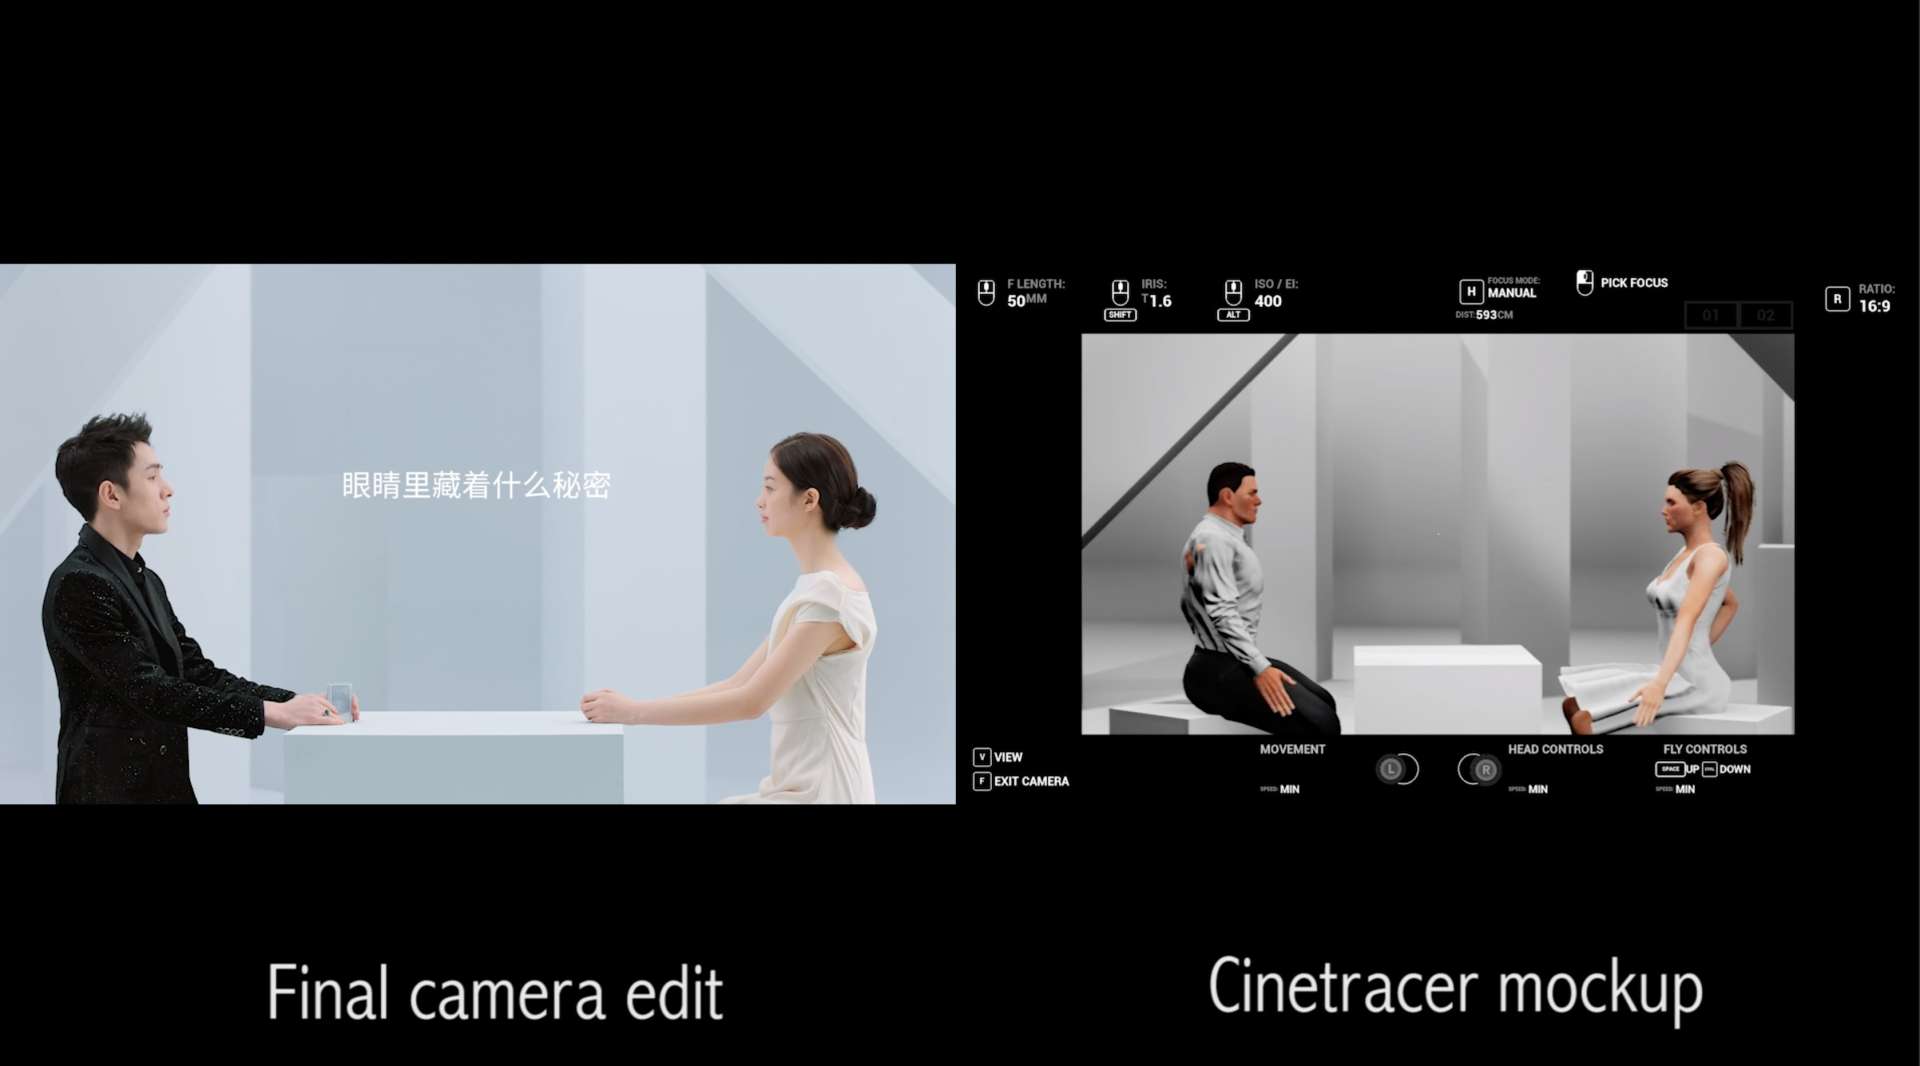 Cinetracer mockup vs real camera work